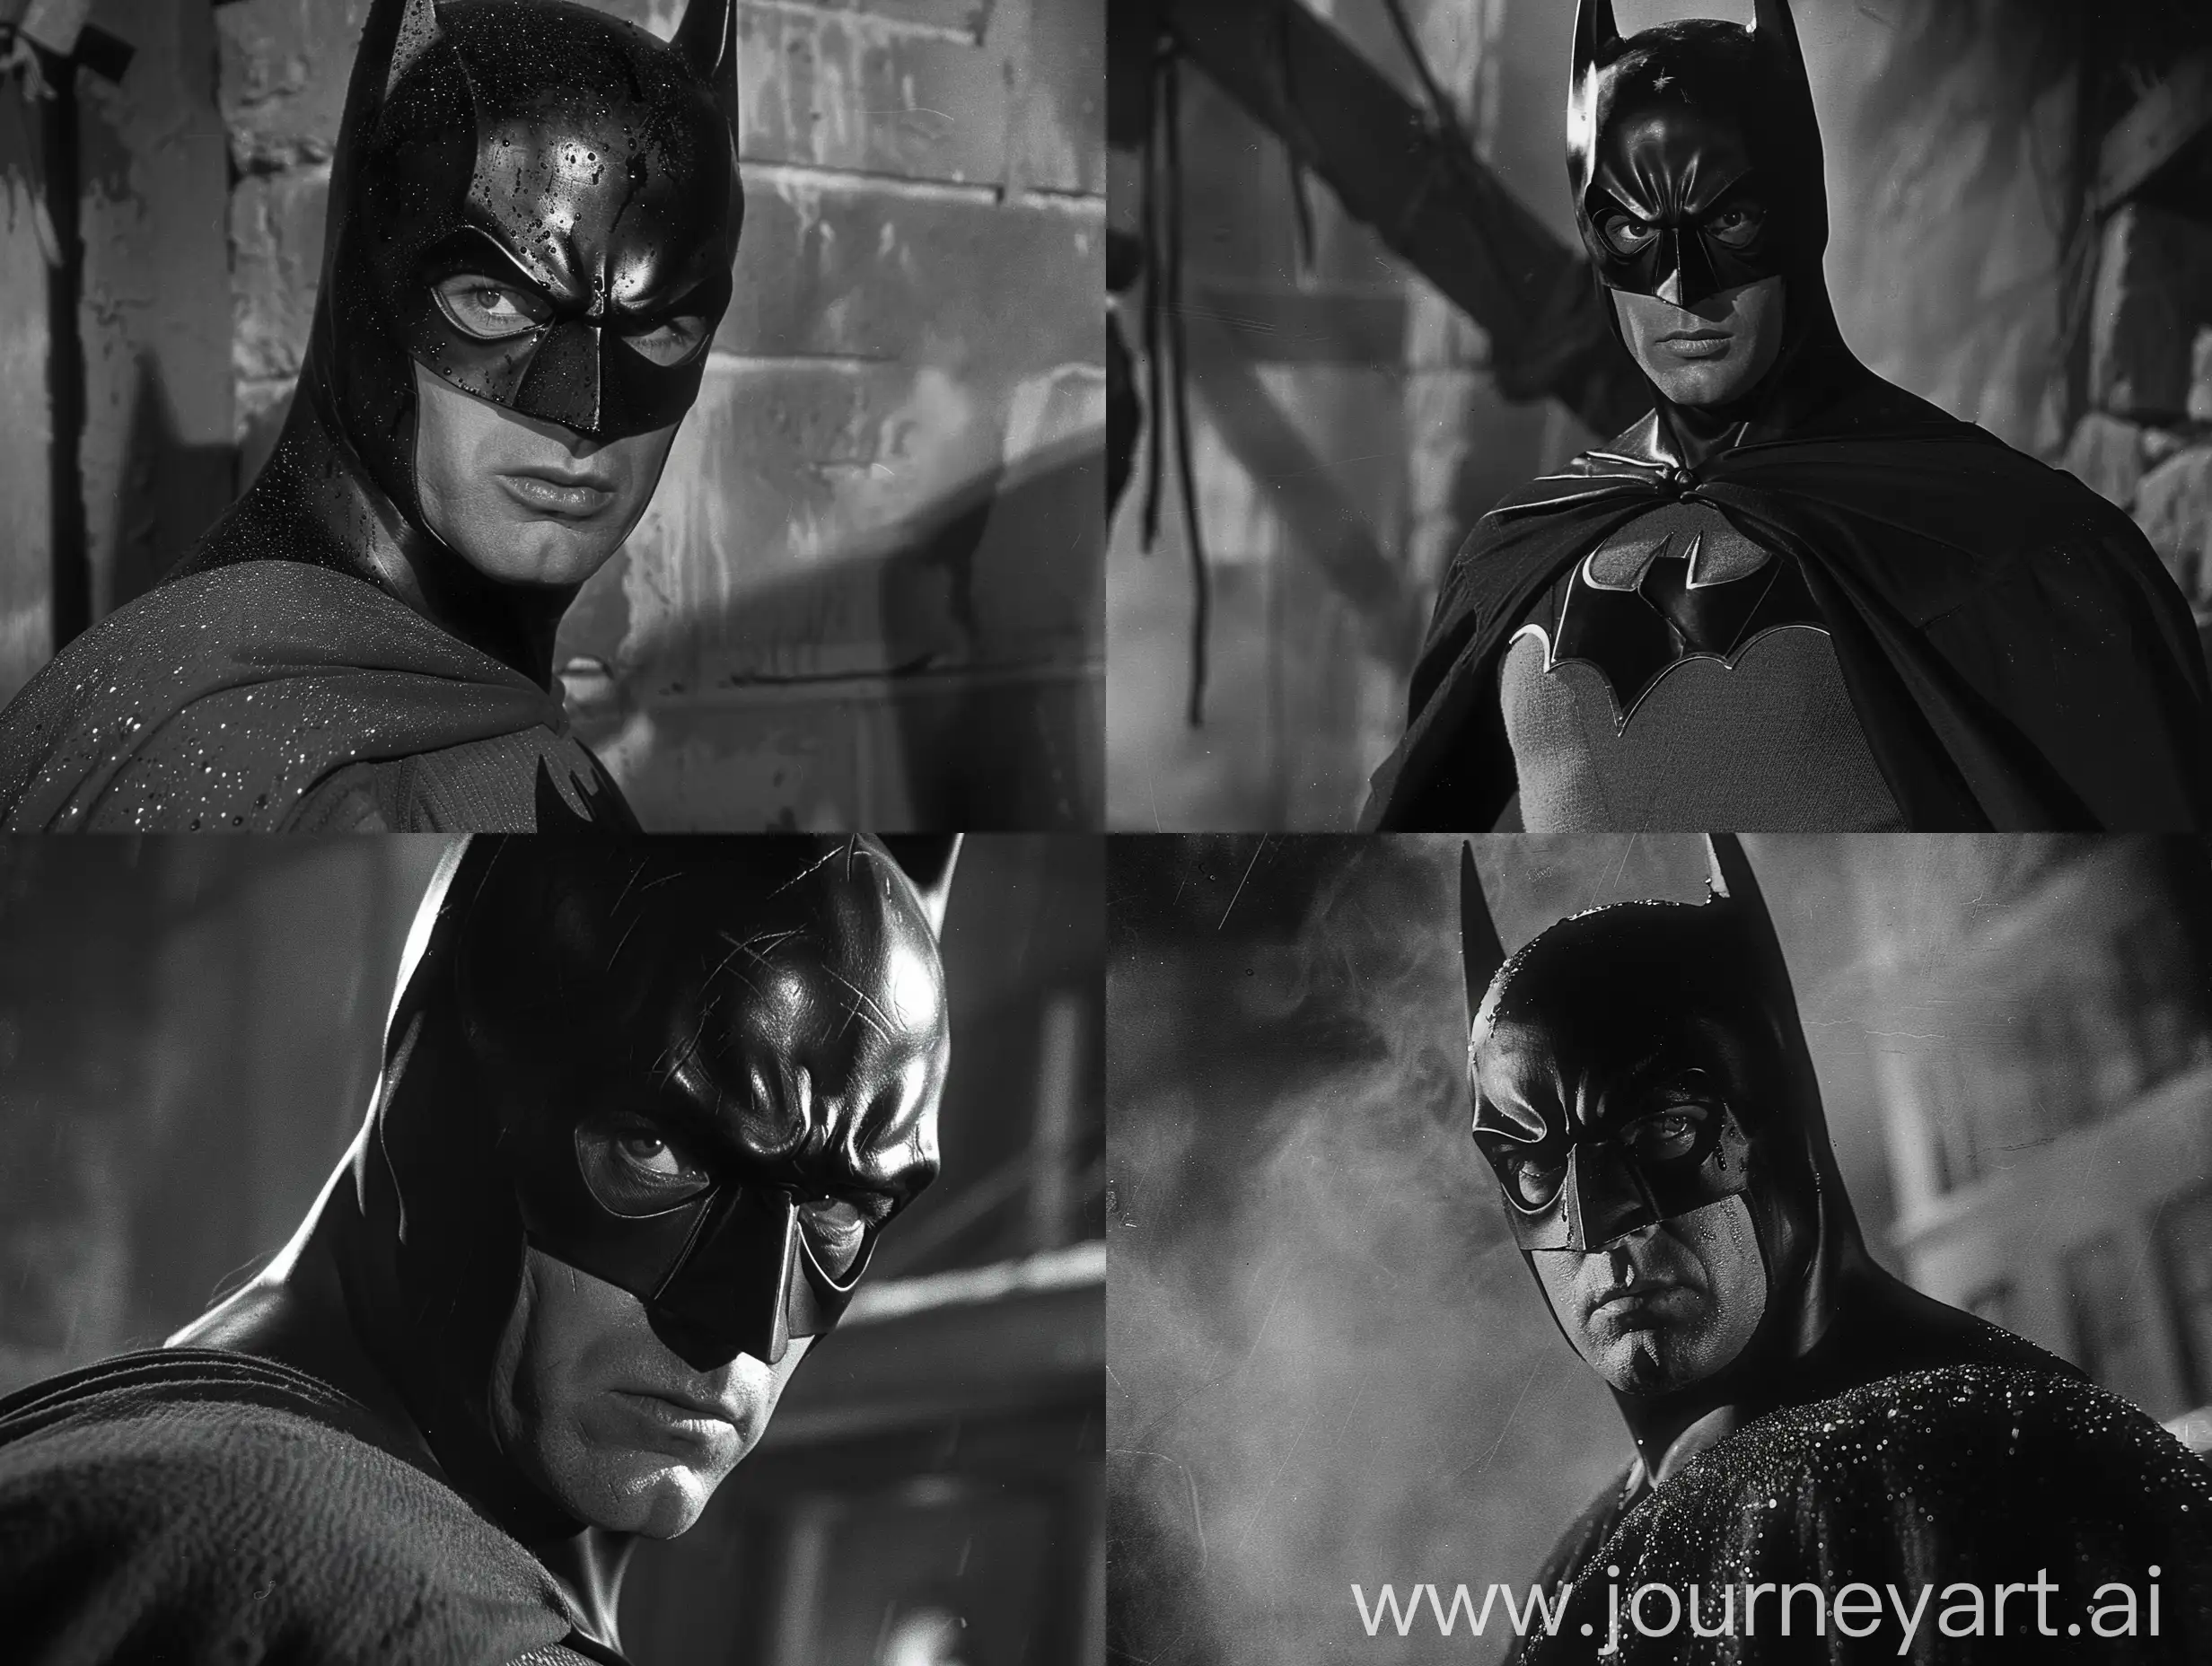 Batman, enhanced by 1950's super Panavision,low quality